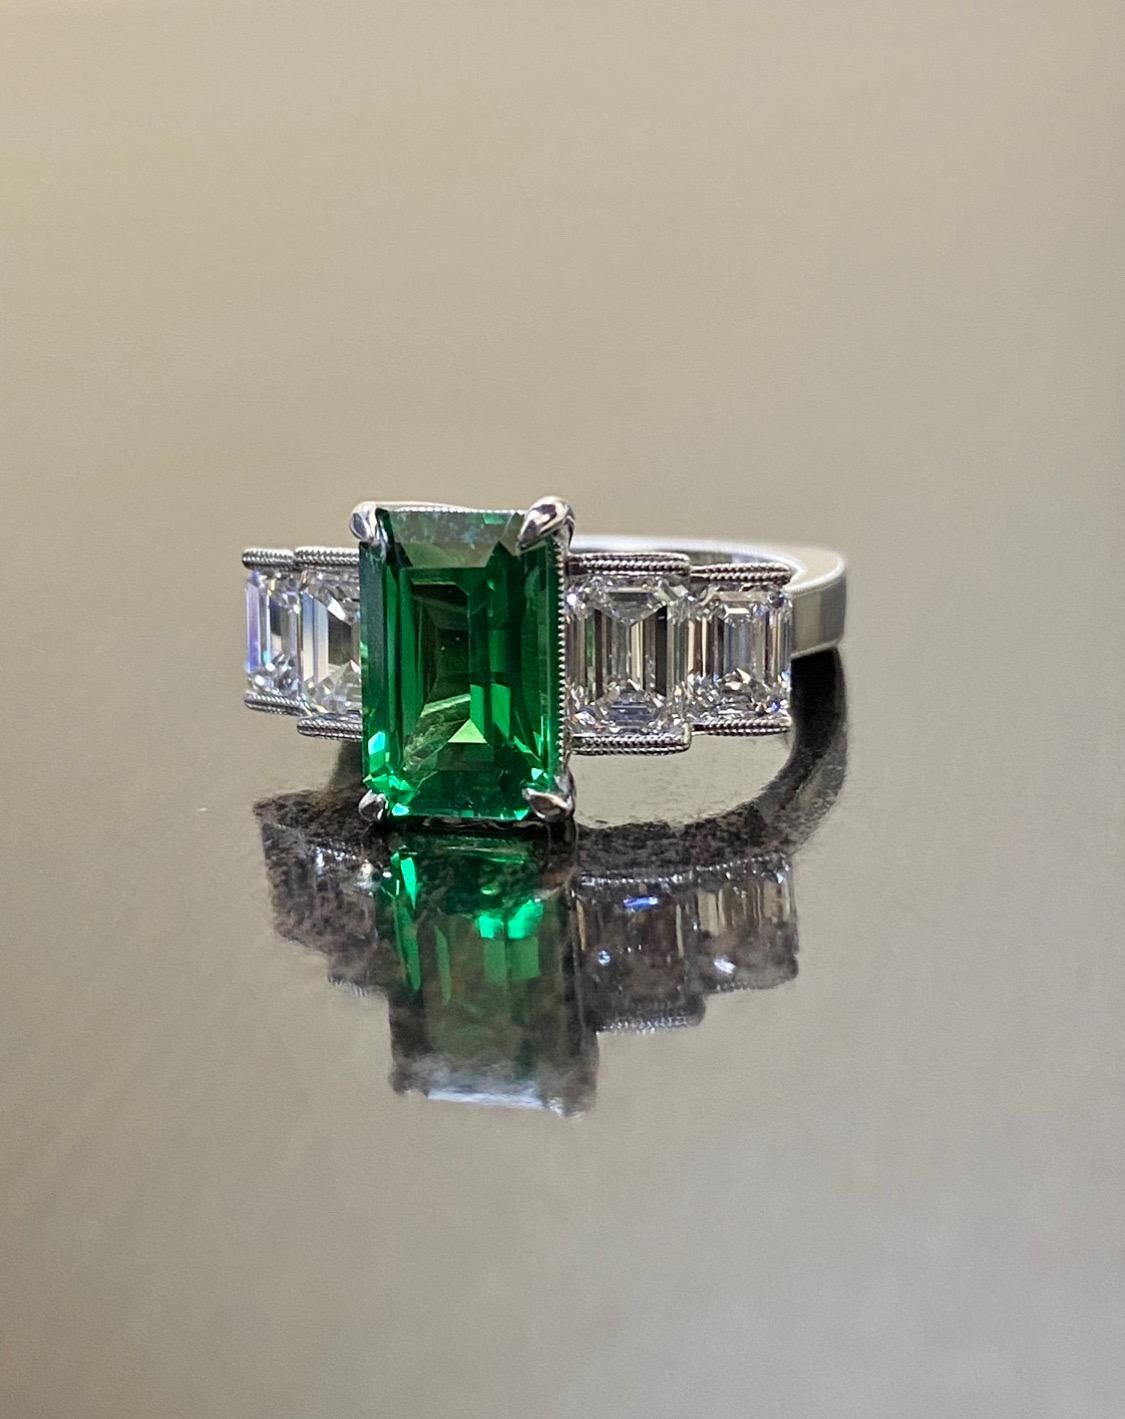 DeKara Designs Collection

Featuring An All GIA Certified Five Stone Emerald Cut Diamond and Radiant Cut Garnet Engagement Ring.
Shape- Elongated Radiant Cut 9 (Octagonal Step Cut)

Metal- 90% Platinum, 10% Iridium.

Stones- GIA Certified Radiant